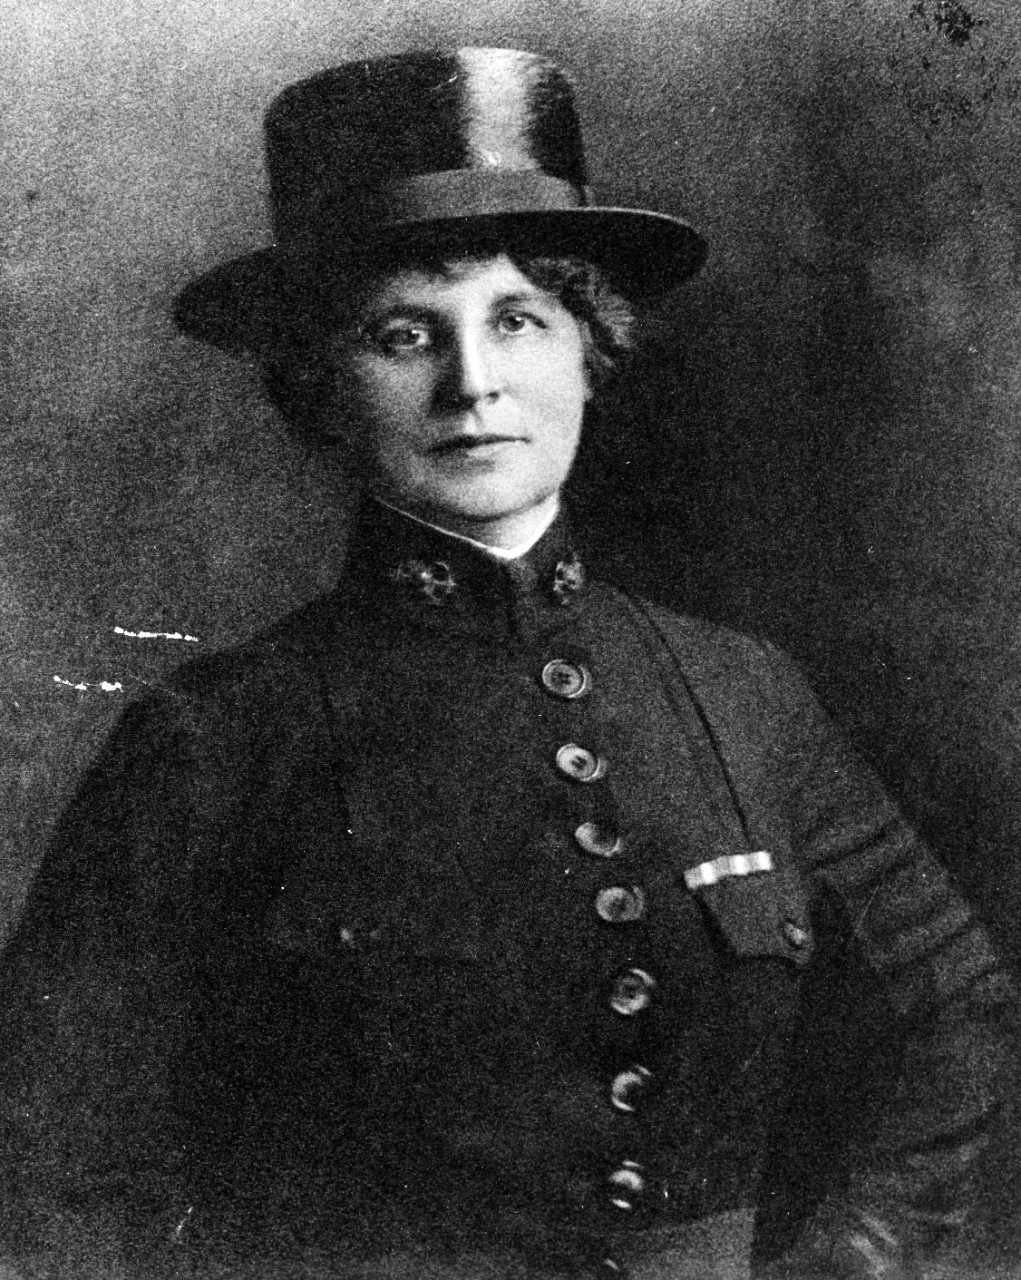 A portrait of a woman wearing a World War I uniform.